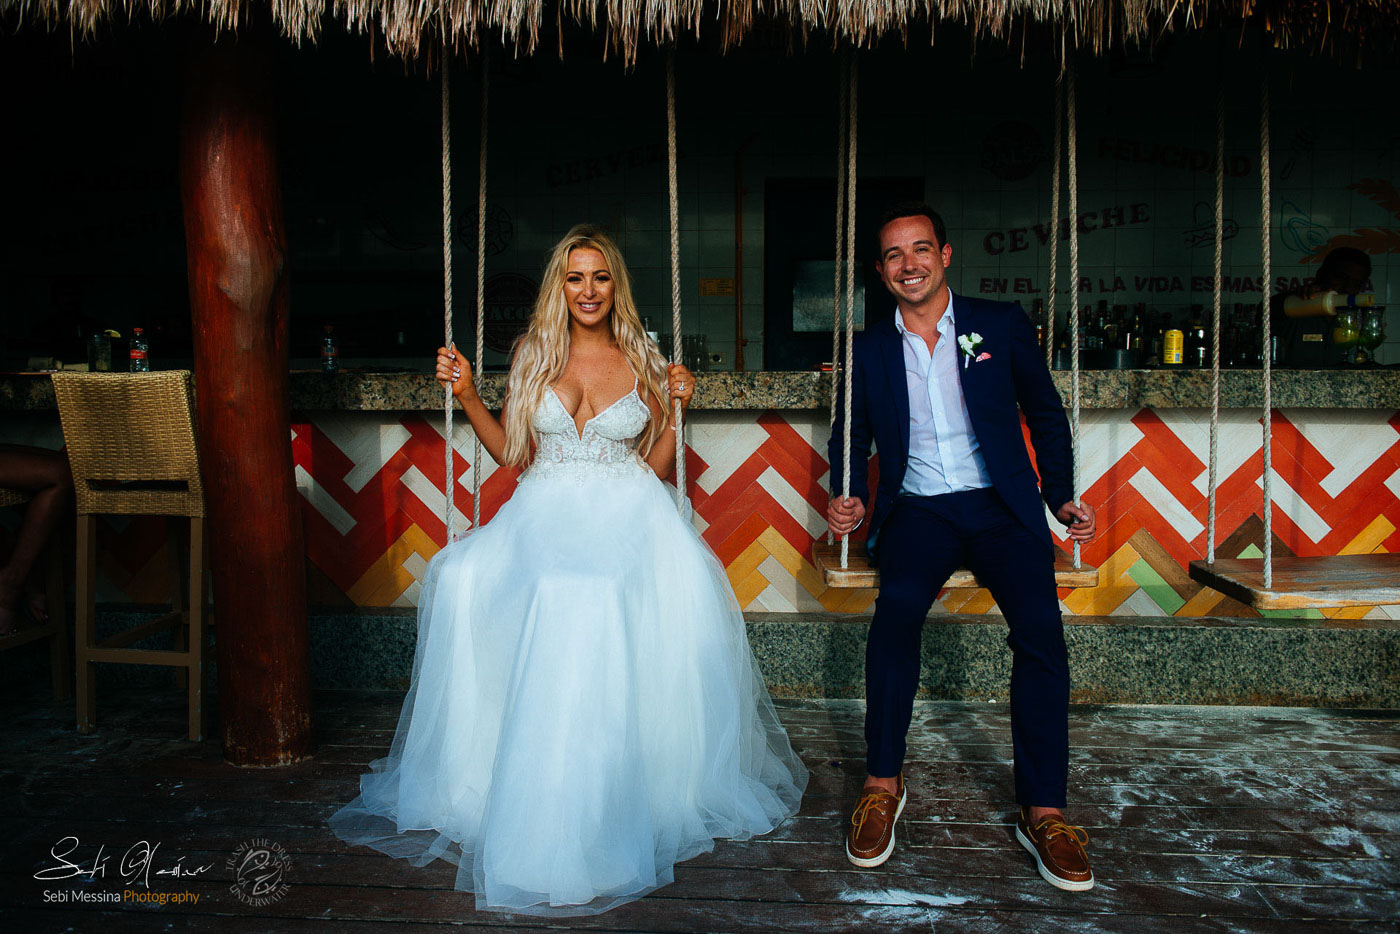 Bride and groom at a destination wedding in Cancun Mexico – Sebi Messina Photography